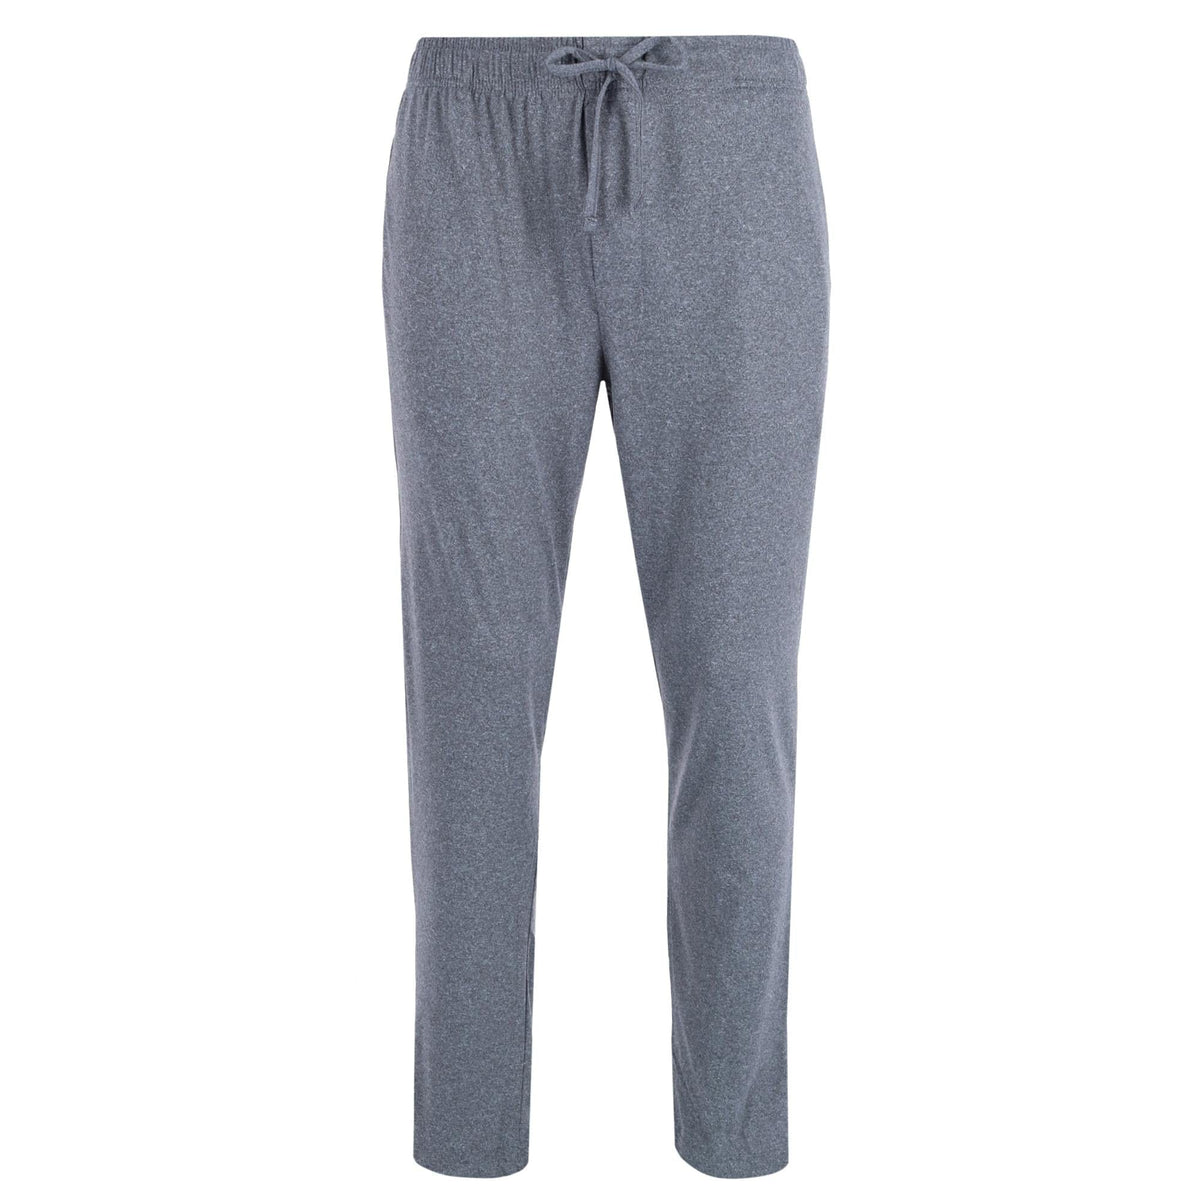 Men's Tag-Free Lightweight Pajama Lounge Pant by Hanes